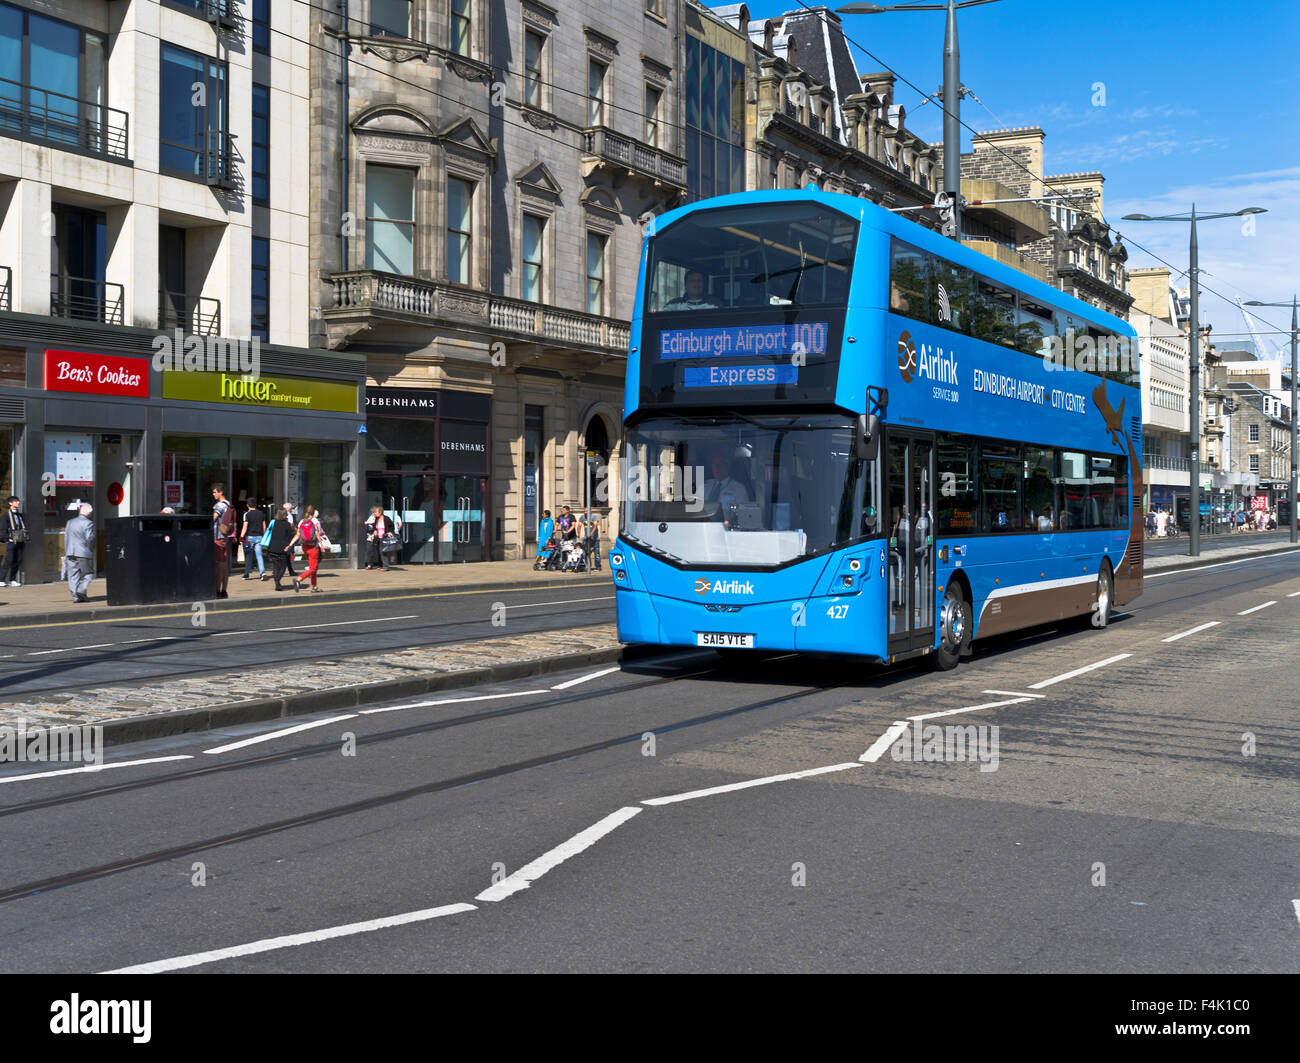 dh PRINCES STREET EDINBURGH Edinburgh Airport Express bus Stockfoto